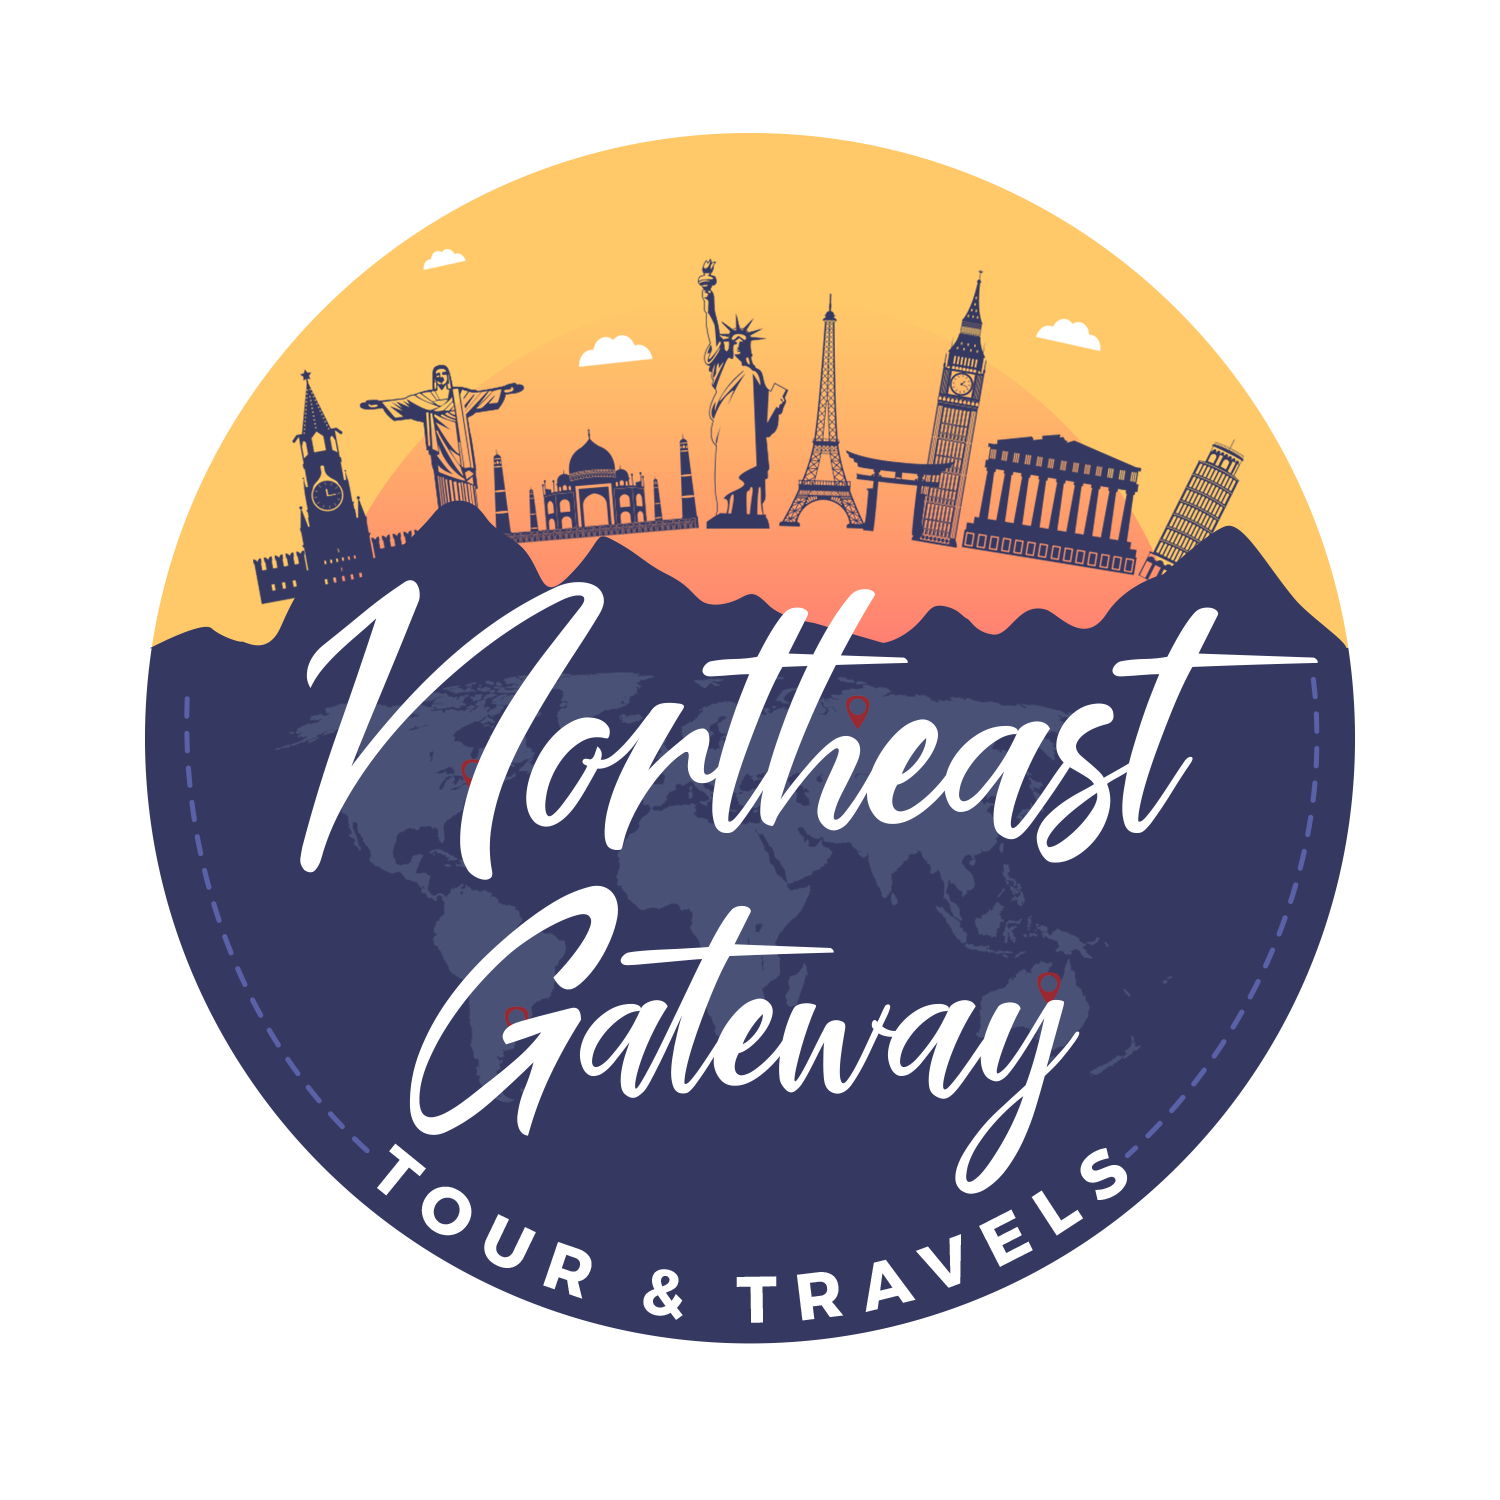 Northeast Gateway Tour & Travels